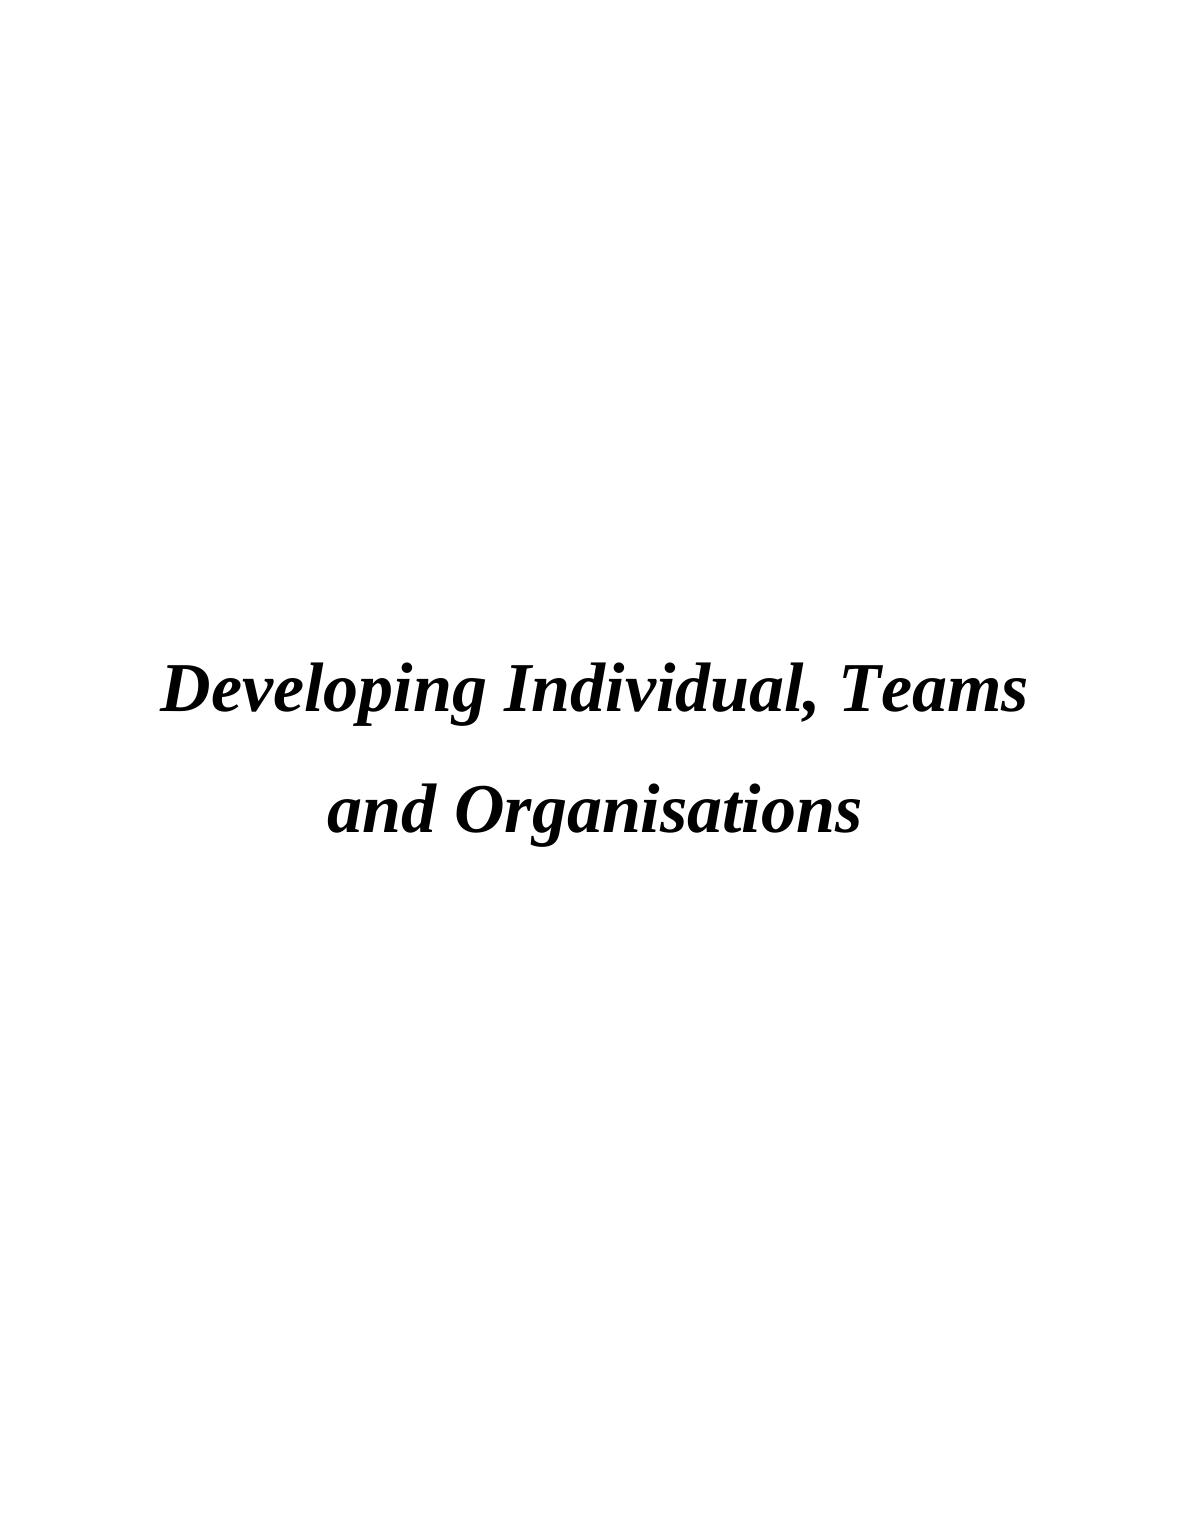 Developing Individual, Teams, Organisations_1